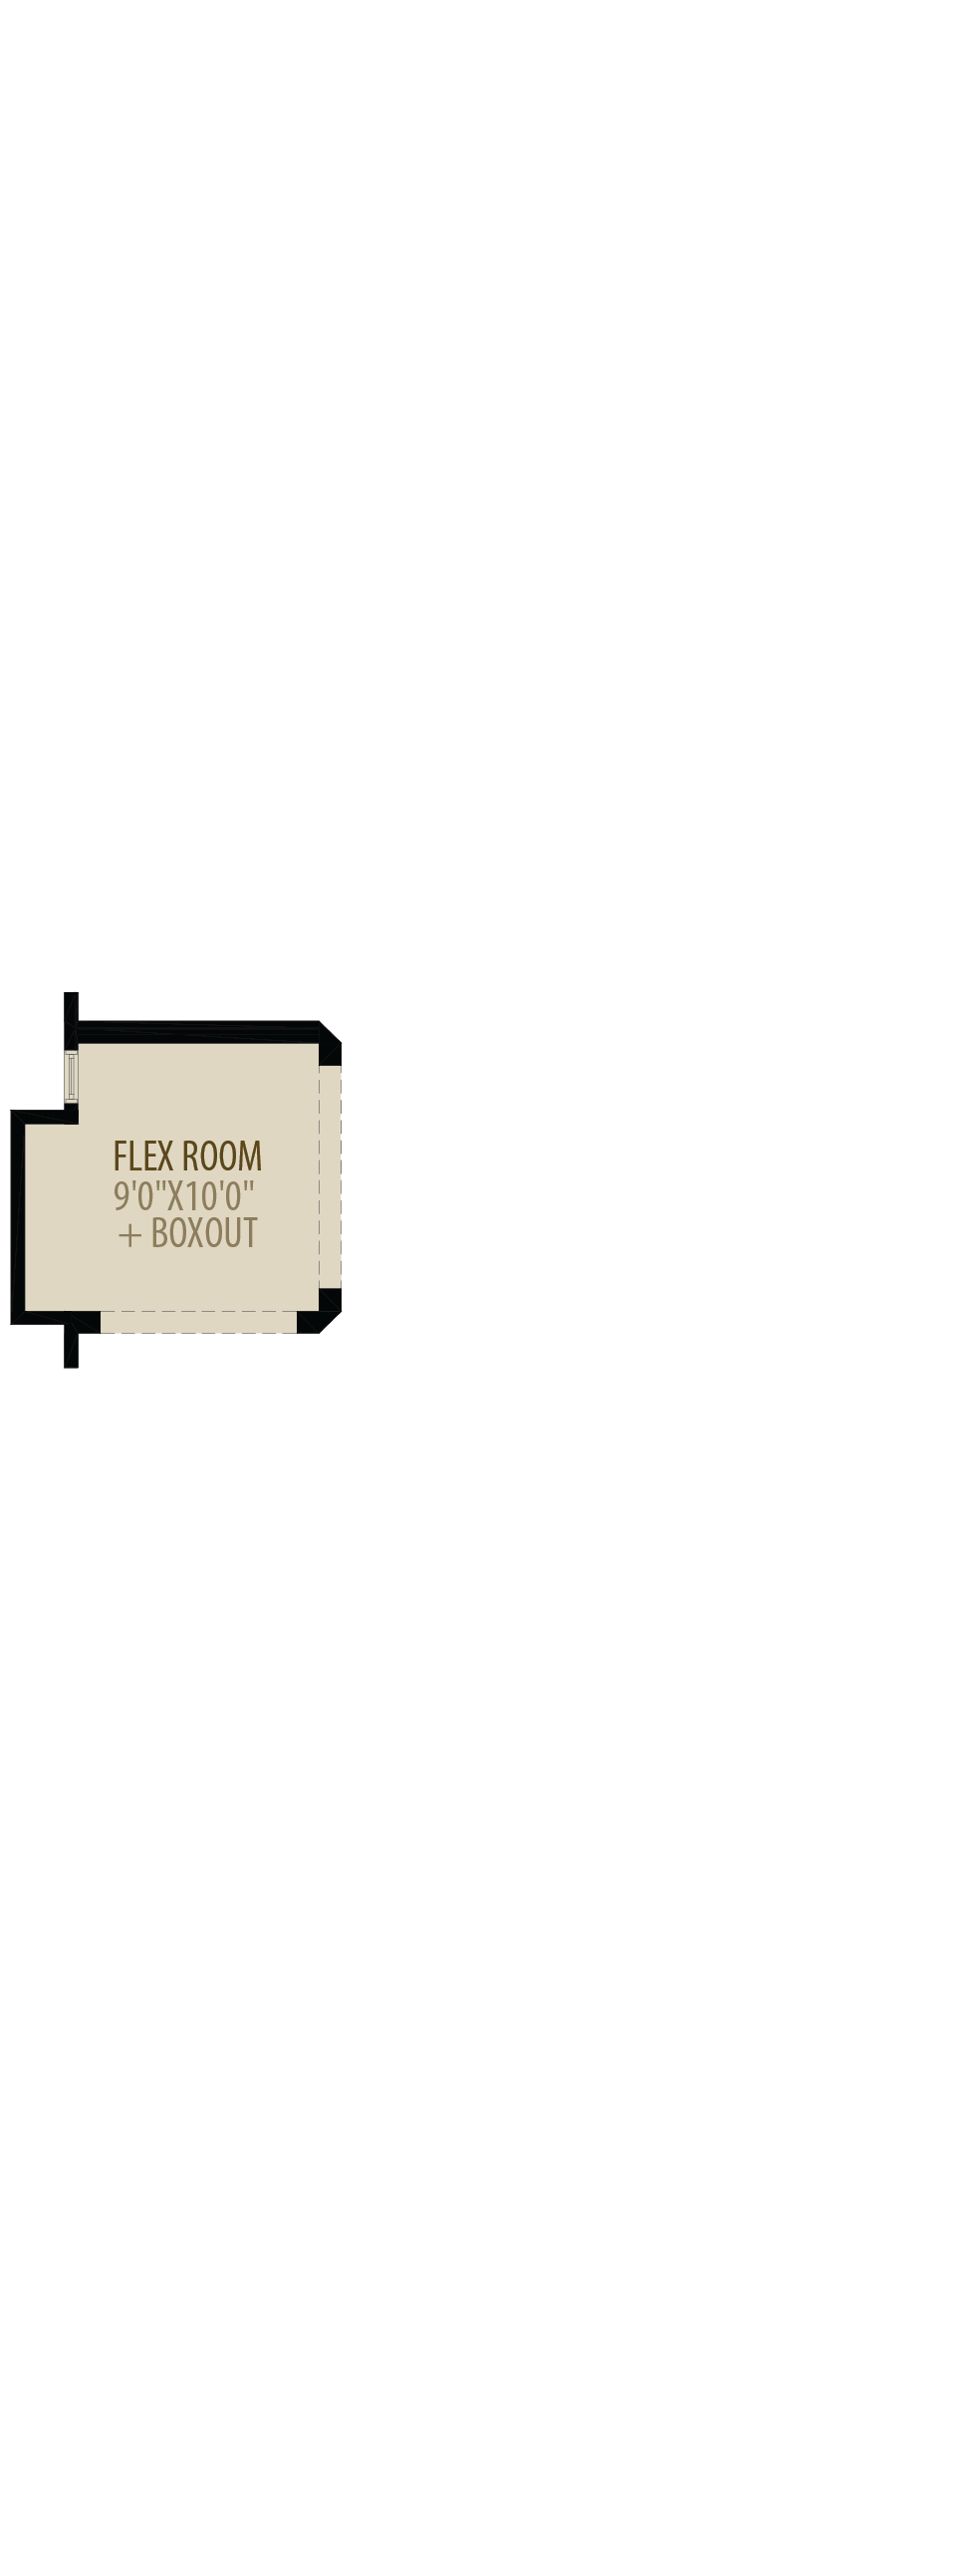 Flex Room Cantilever adds 16sq ft